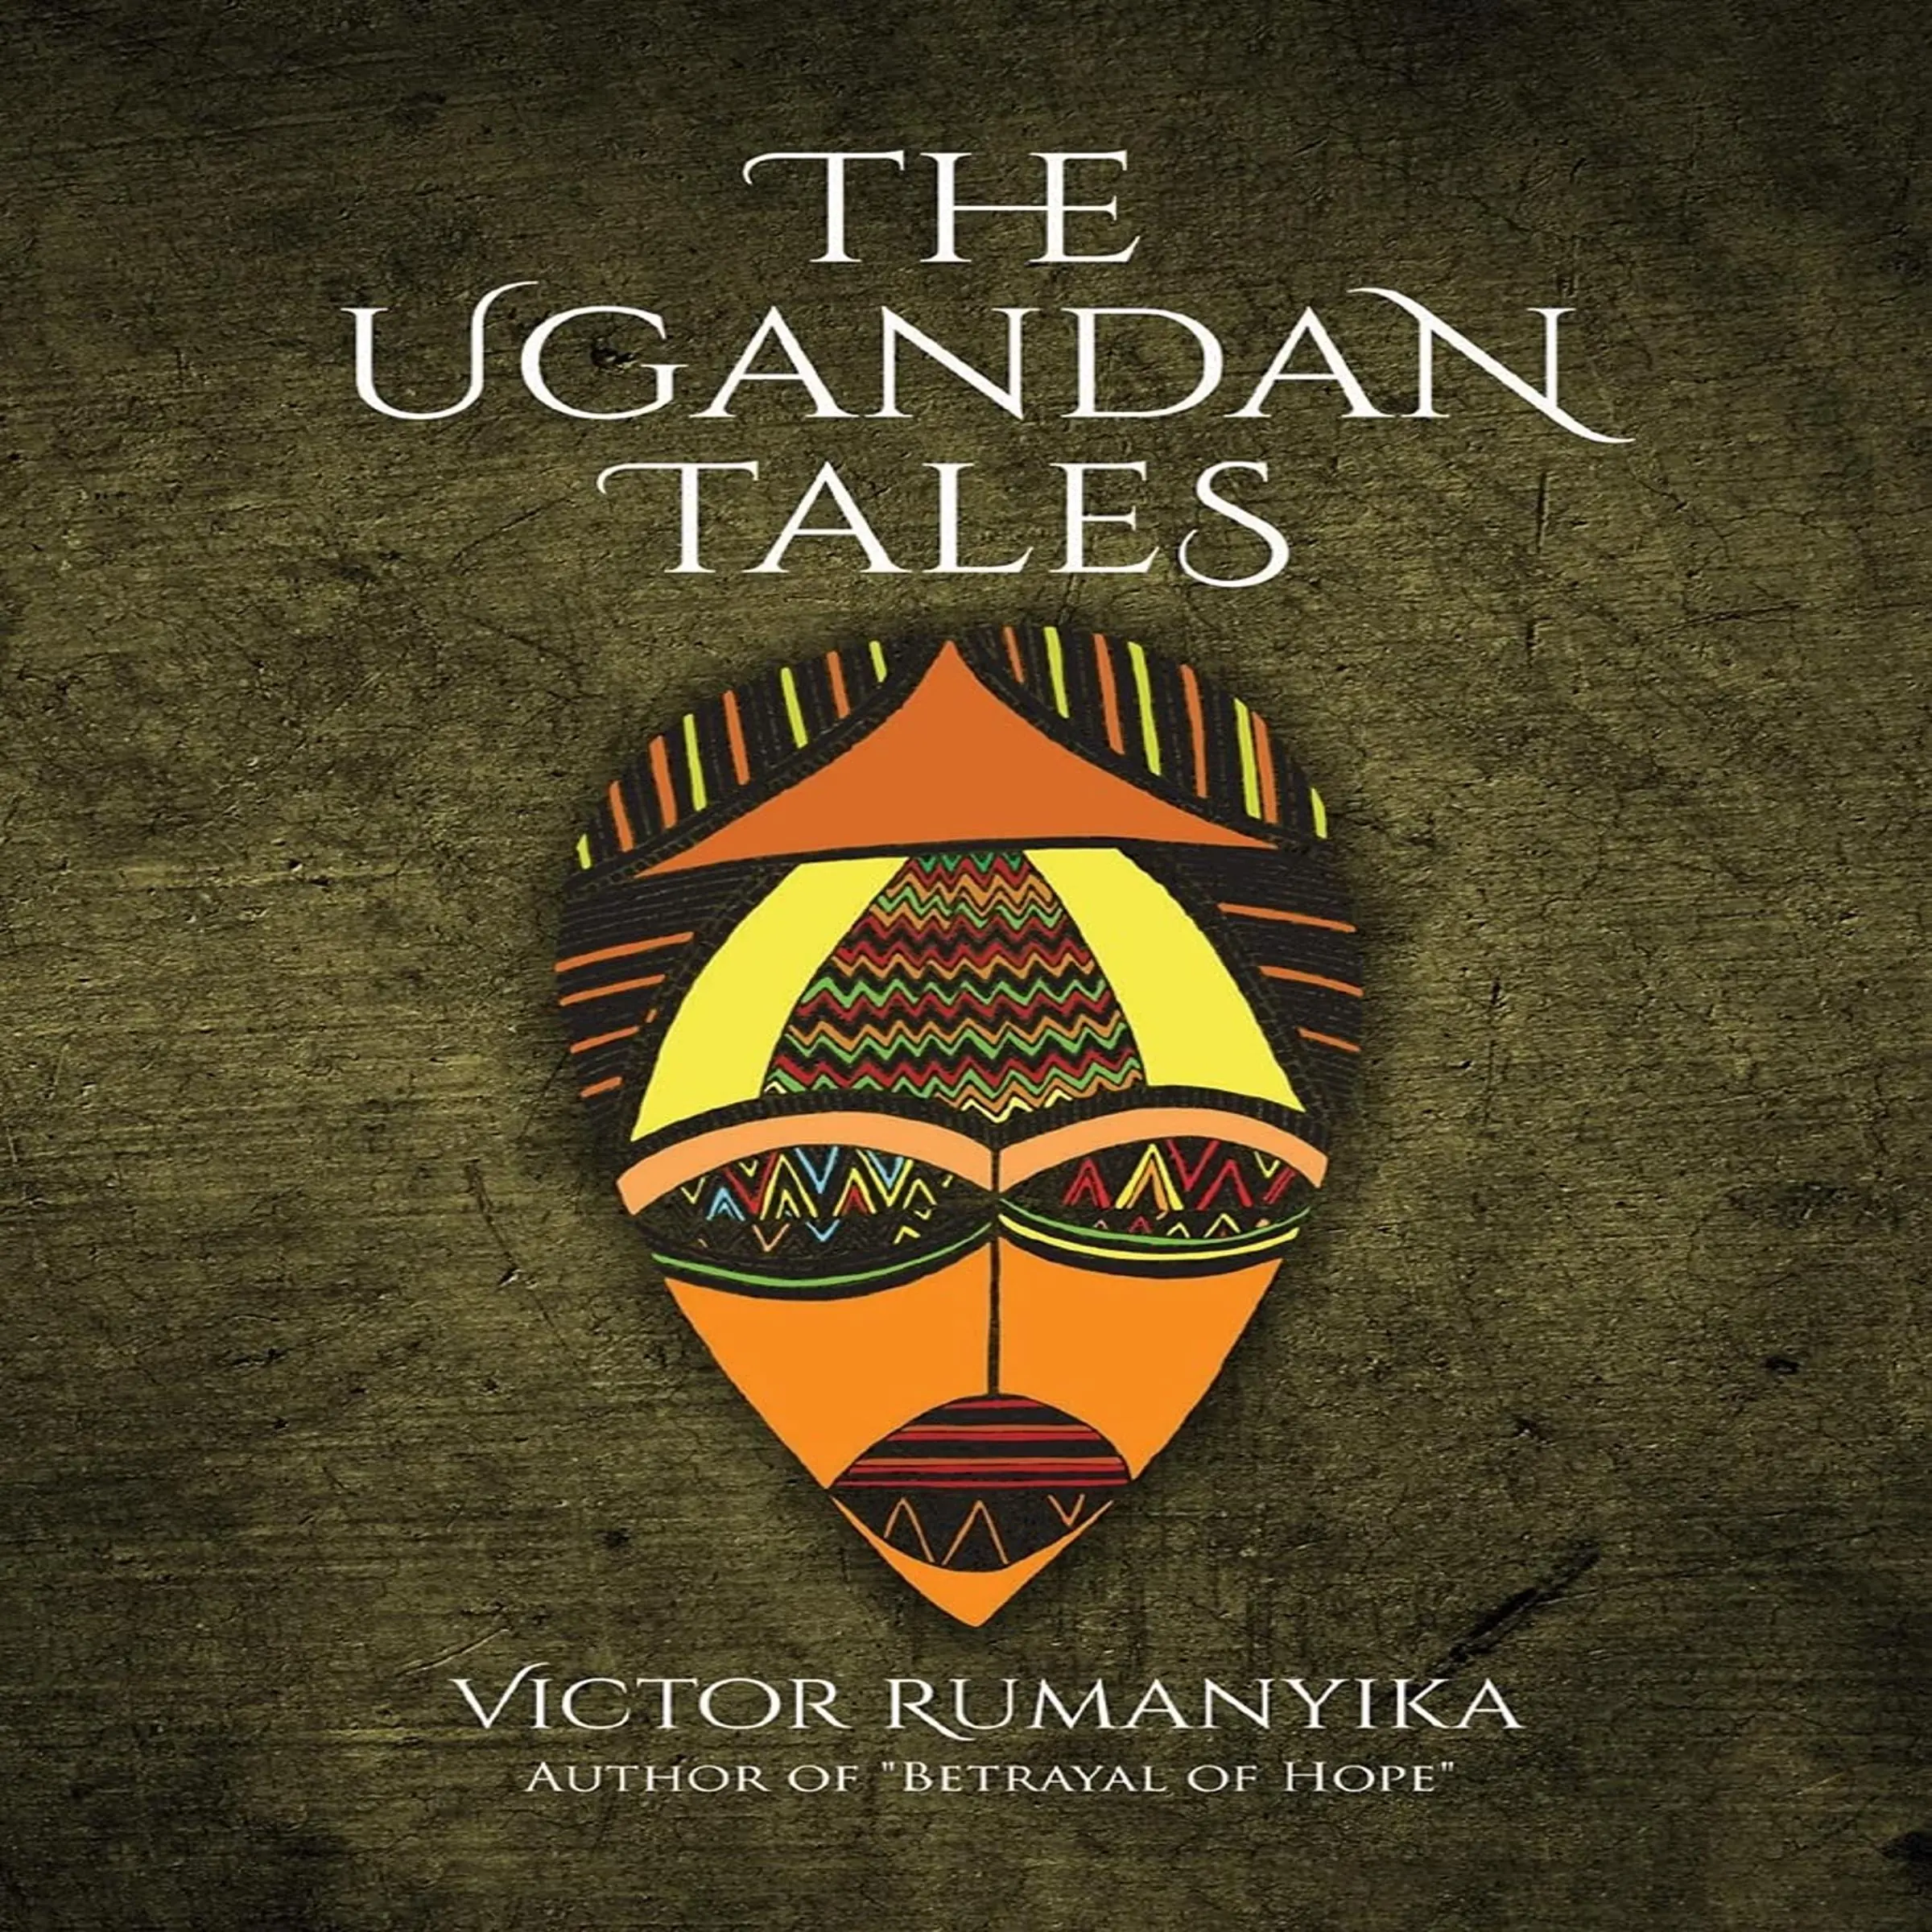 The Ugandan Tales Audiobook by Victor Rumanyika